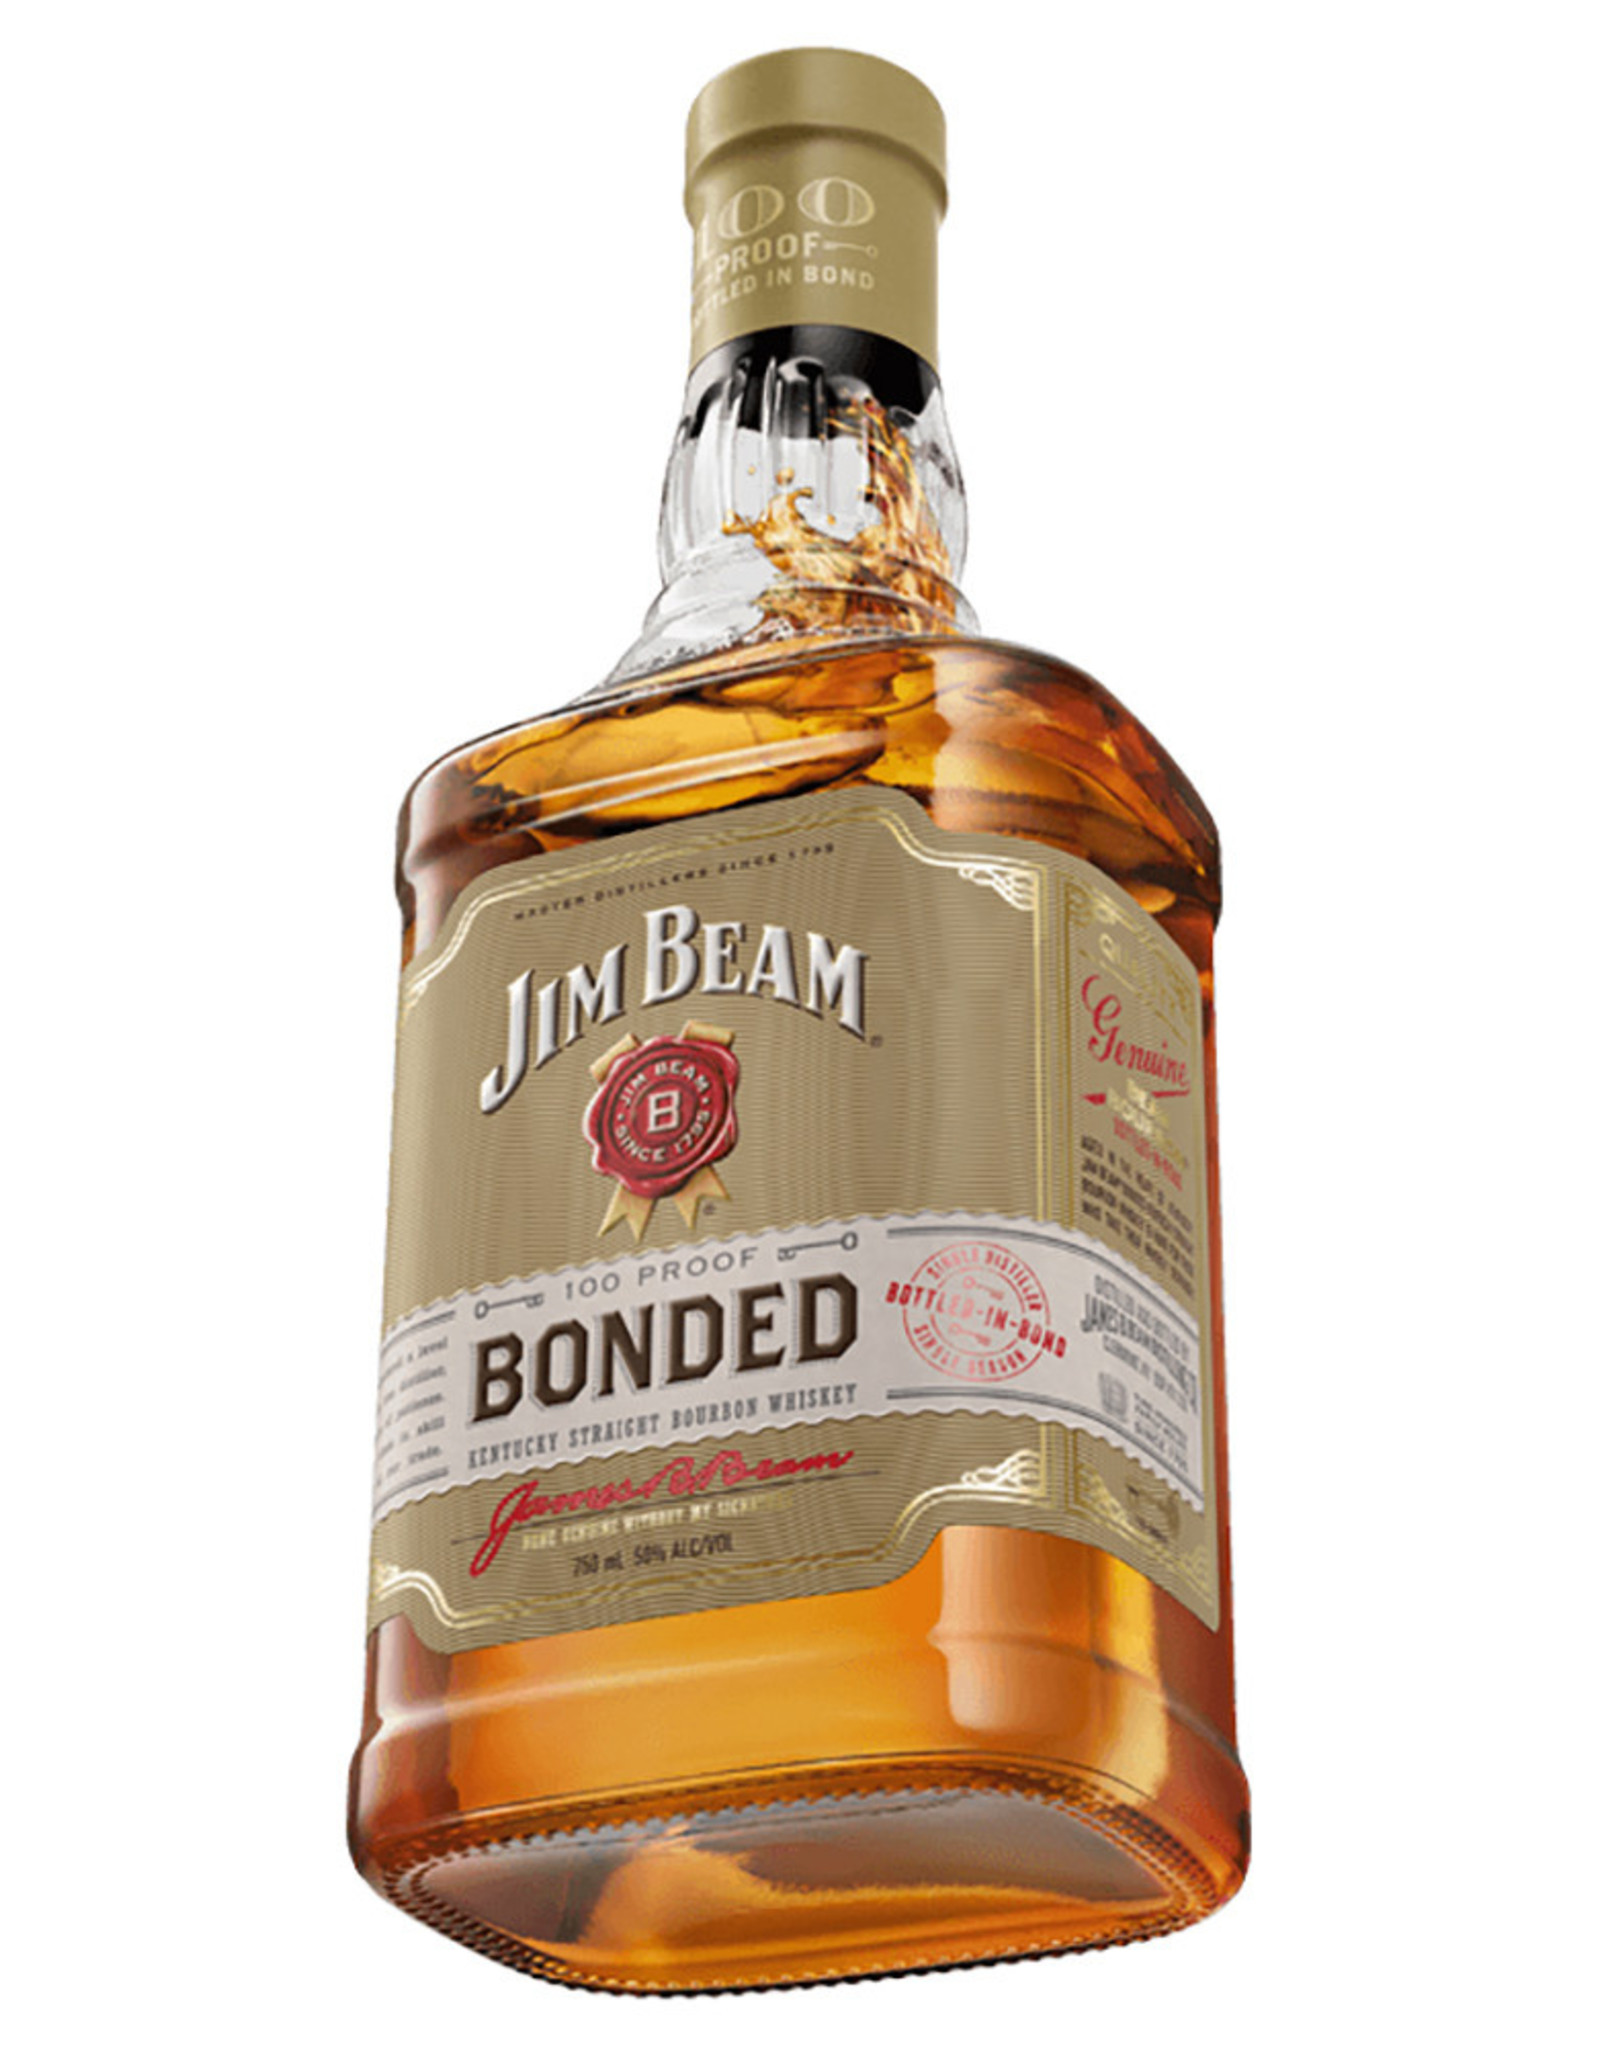 Jim Beam Jim Beam 100 Proof Bonded Bourbon